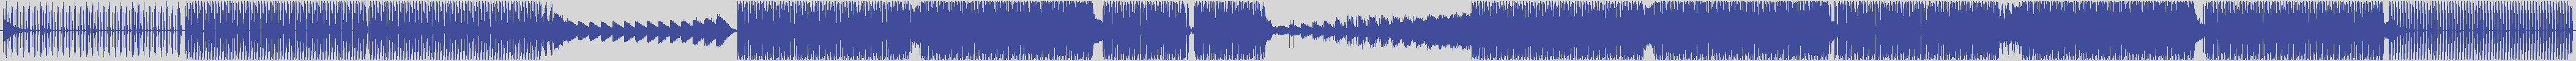 smilax_productions [SPMOL060] Stylus Robb, Mattias - Wow! [Original Mix] audio wave form